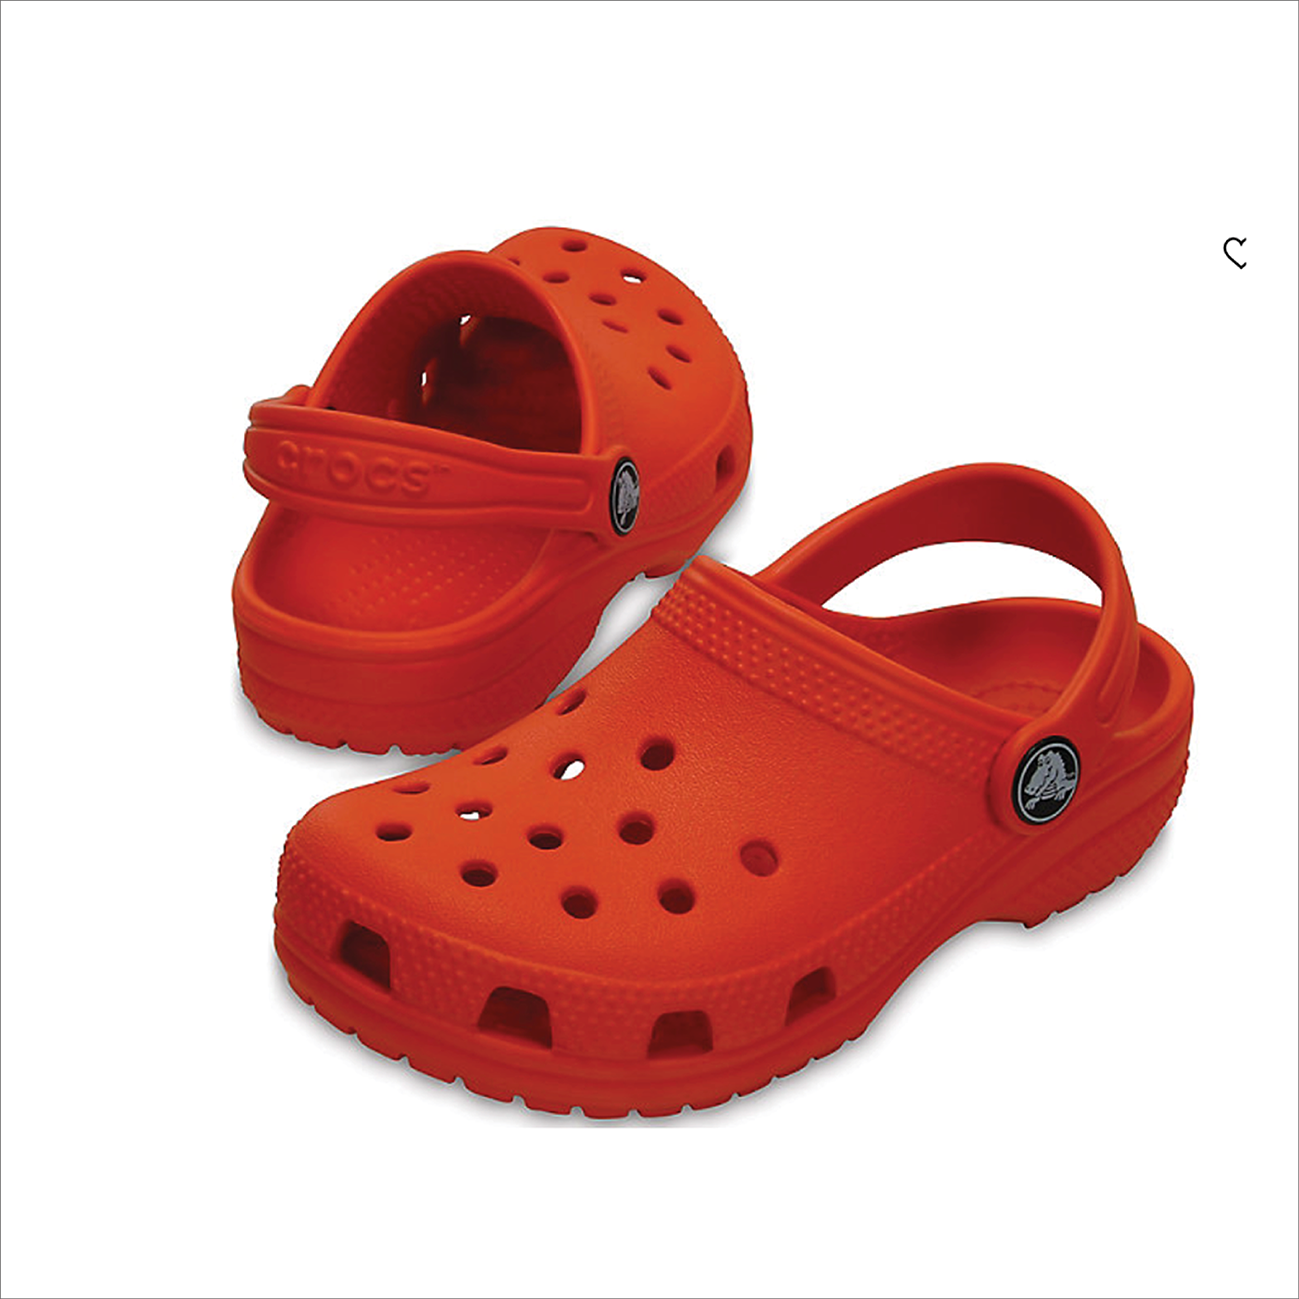 Crocs - kids